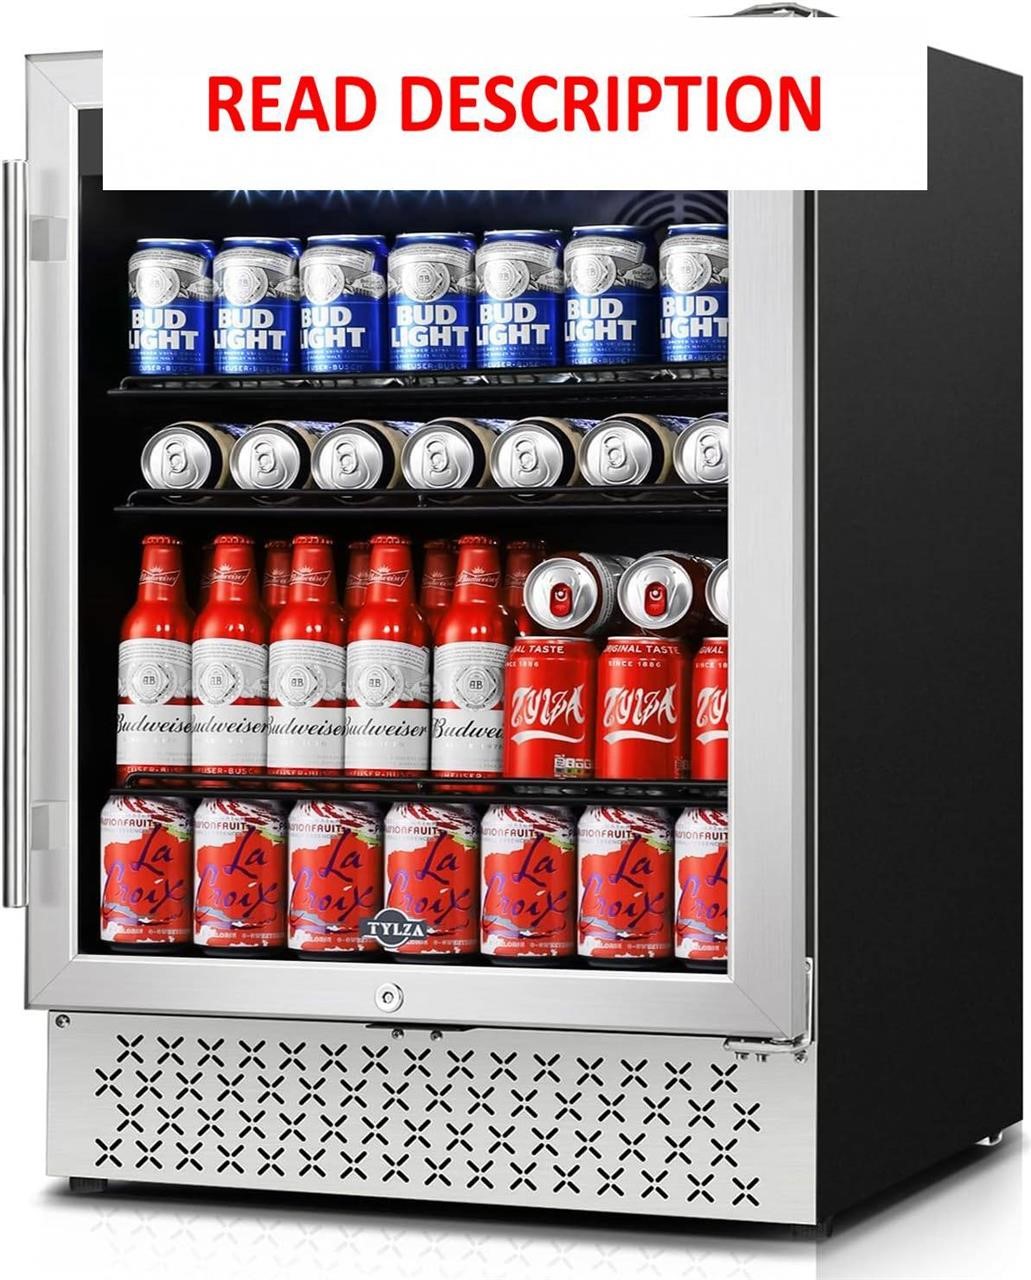 Tylza 24 Inch  190 Can Beverage Refrigerator.